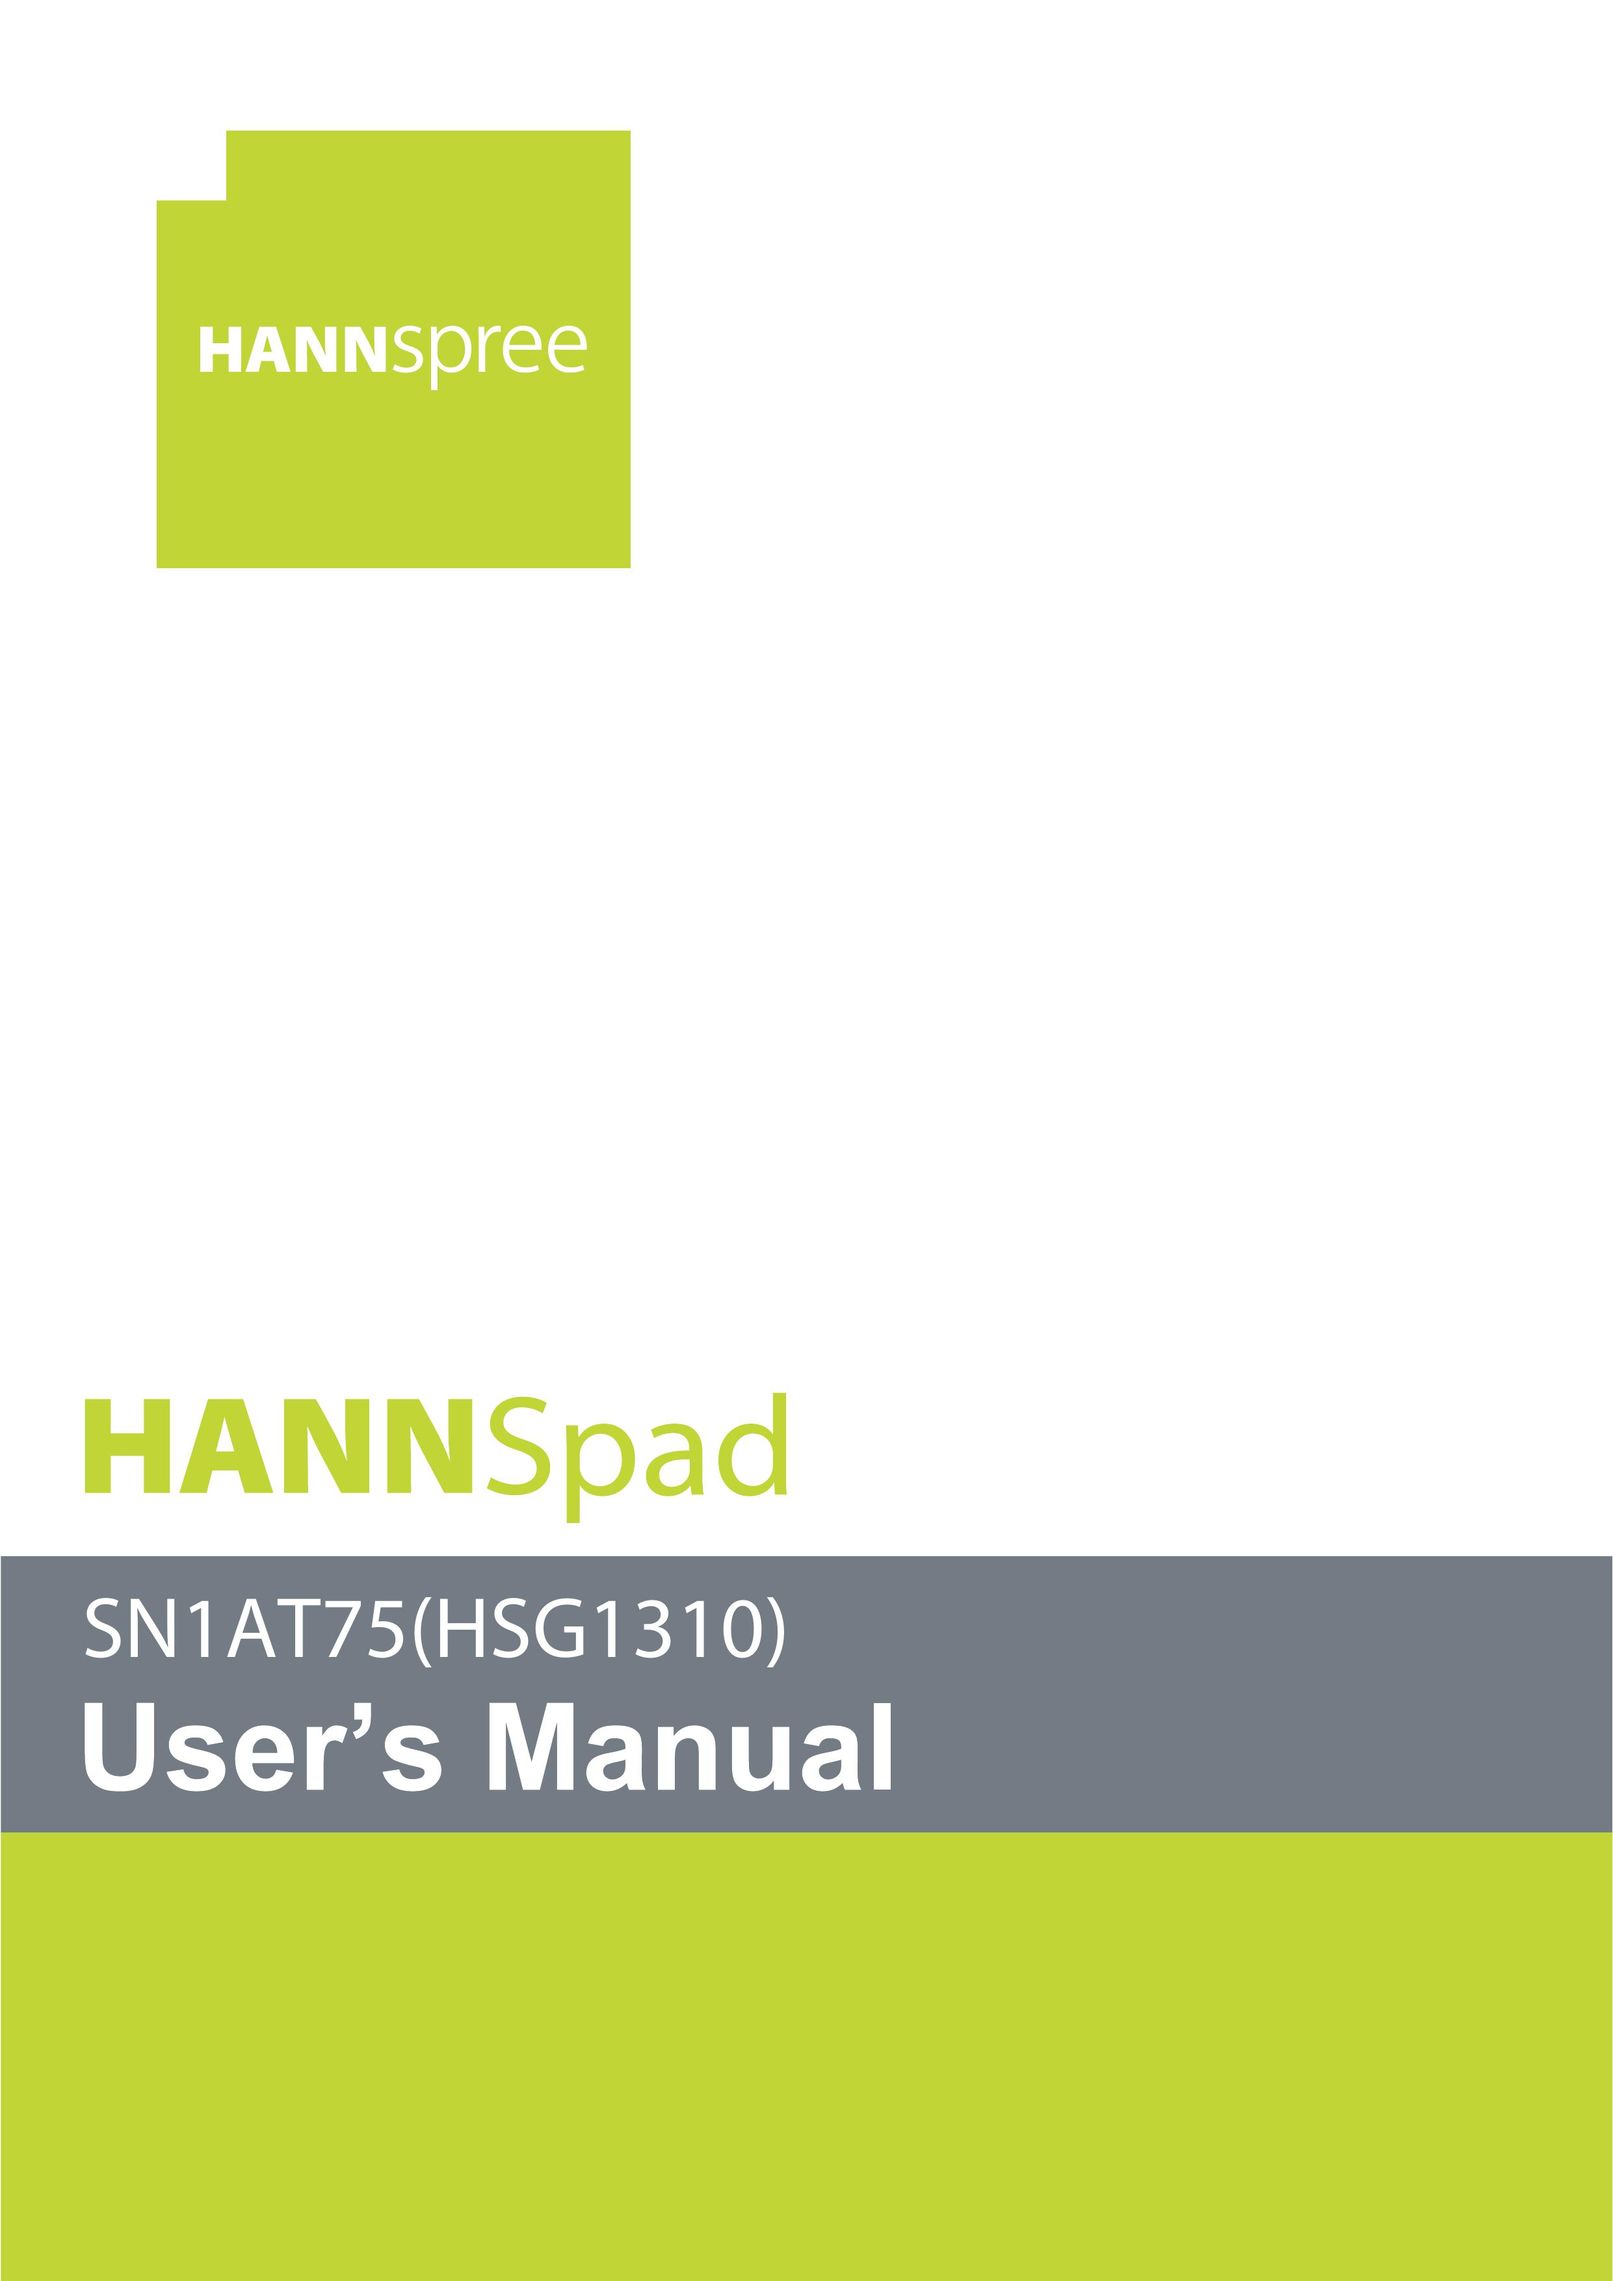 HANNspree SN1AT75(HSG1310) Graphics Tablet User Manual